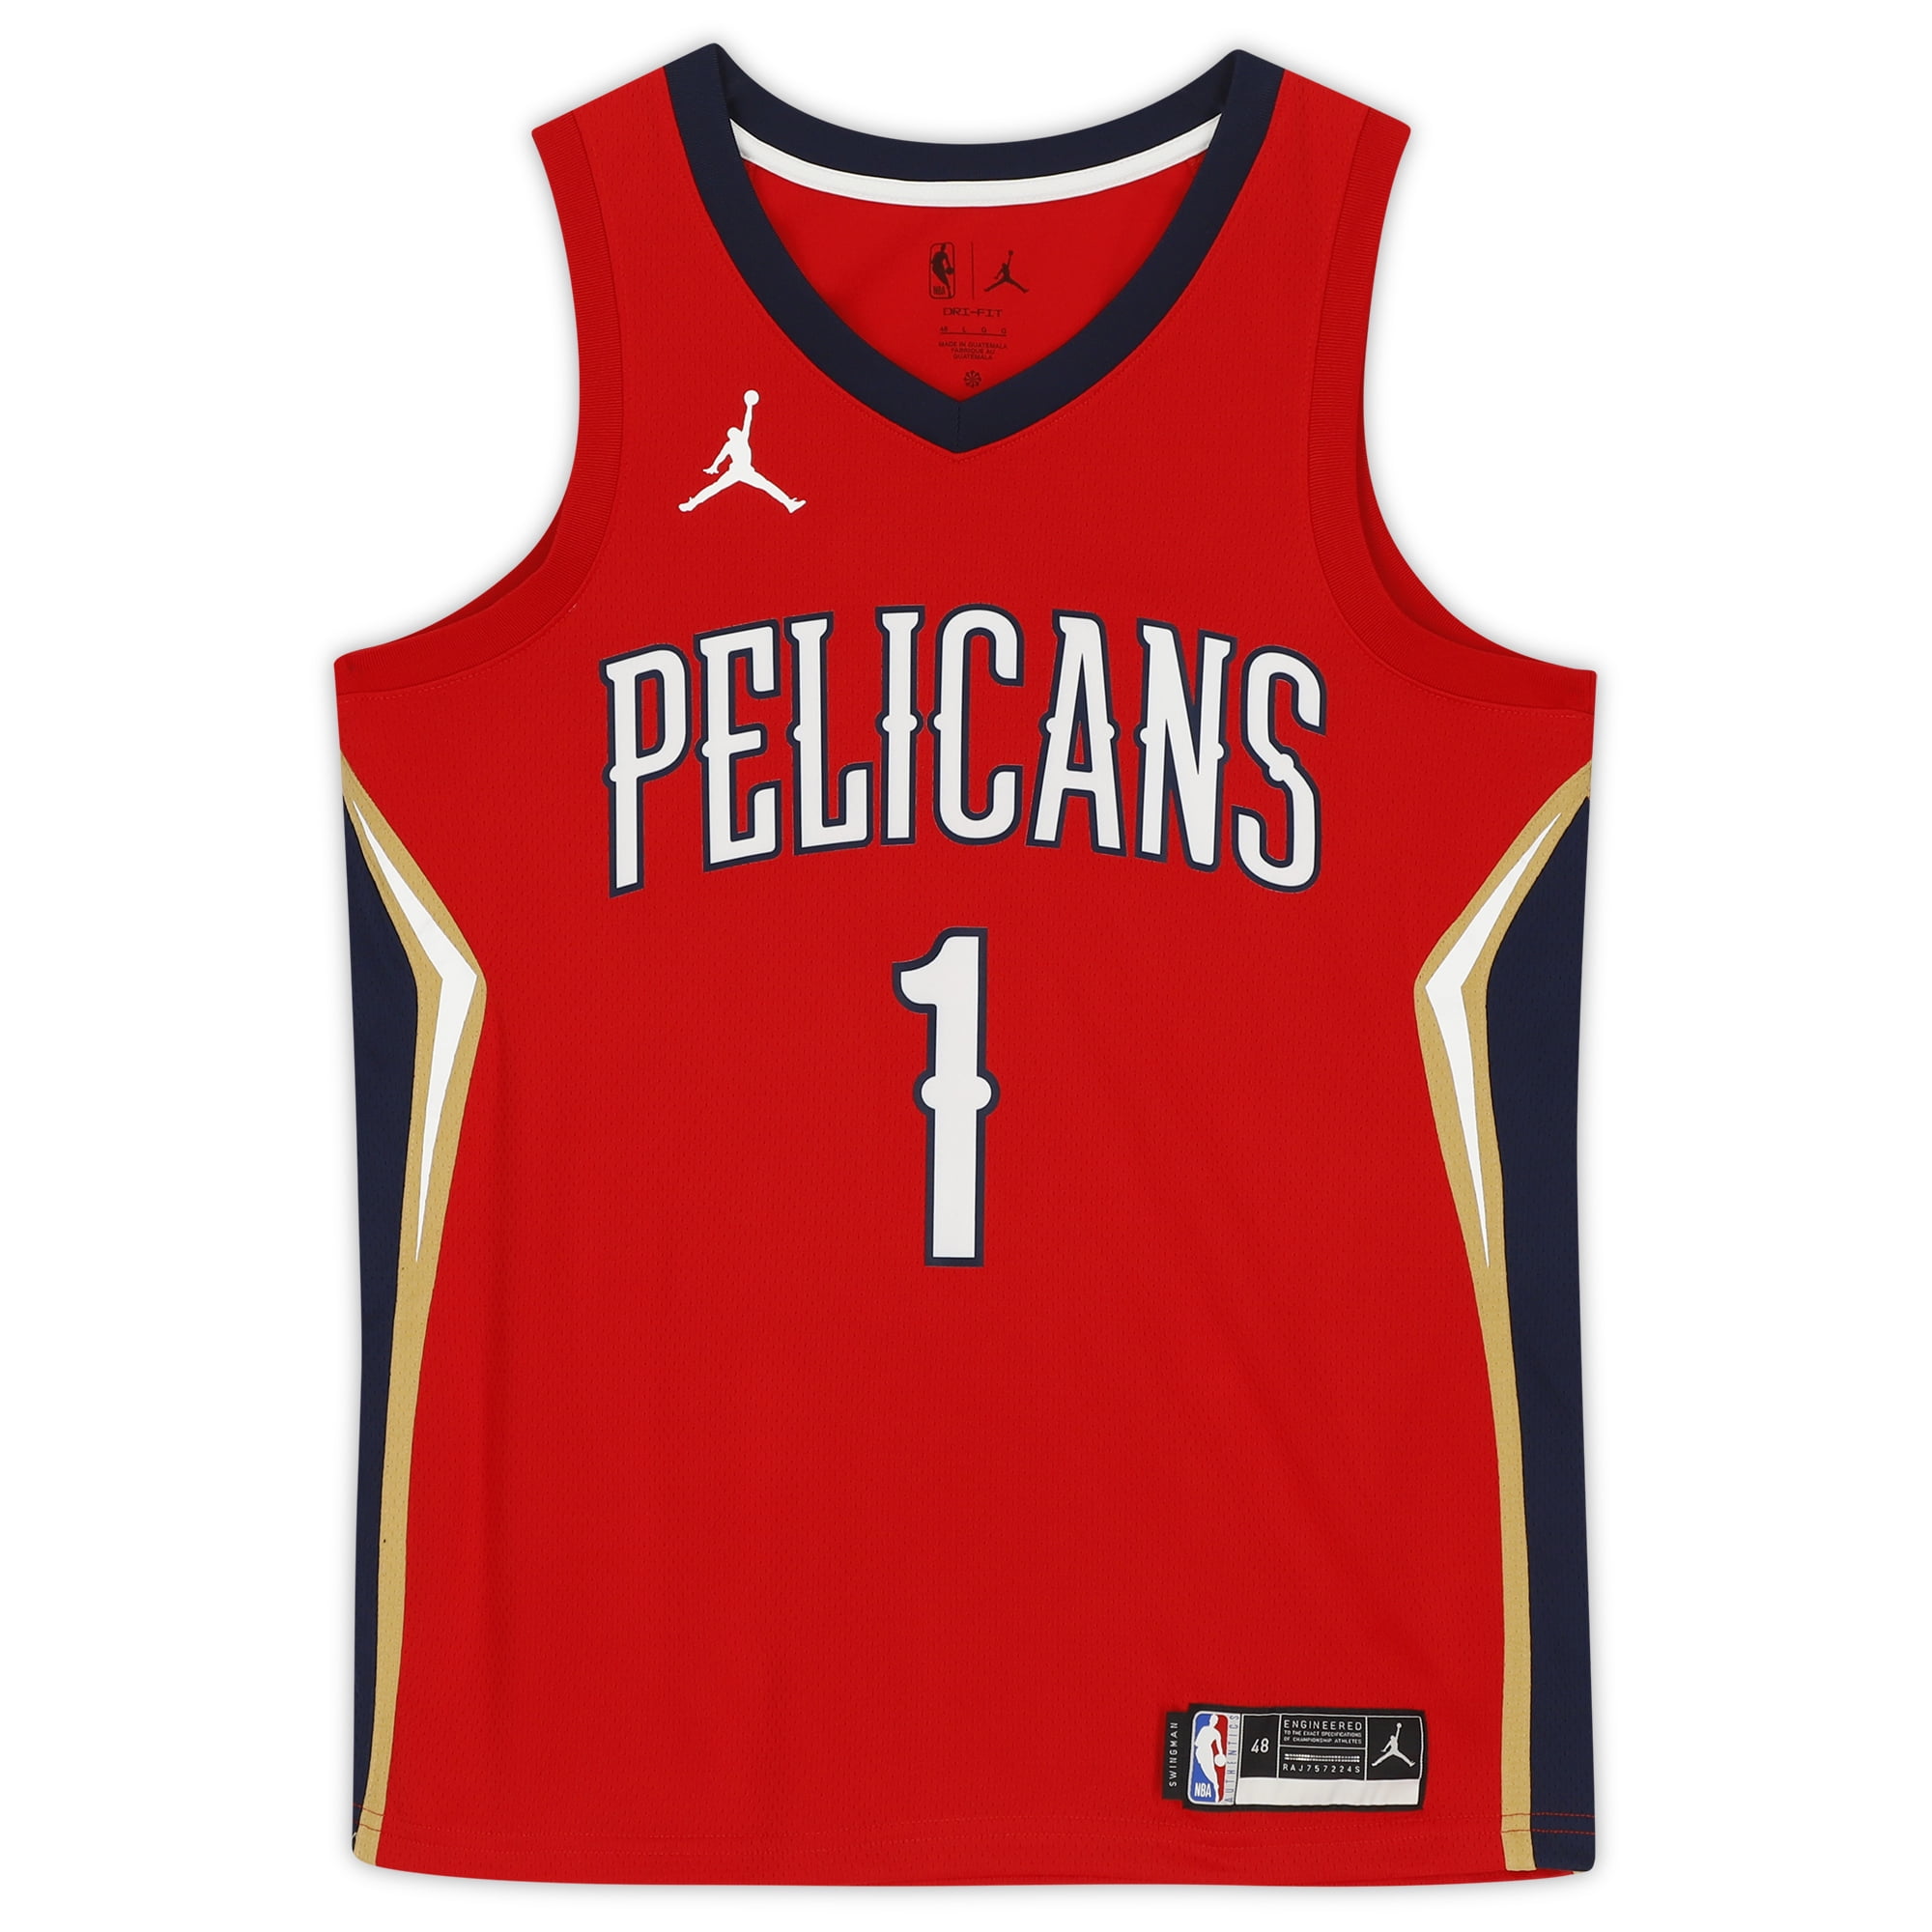 Pelicans' Brandon Ingram signs shoe deal with Jordan Brand, Pelicans